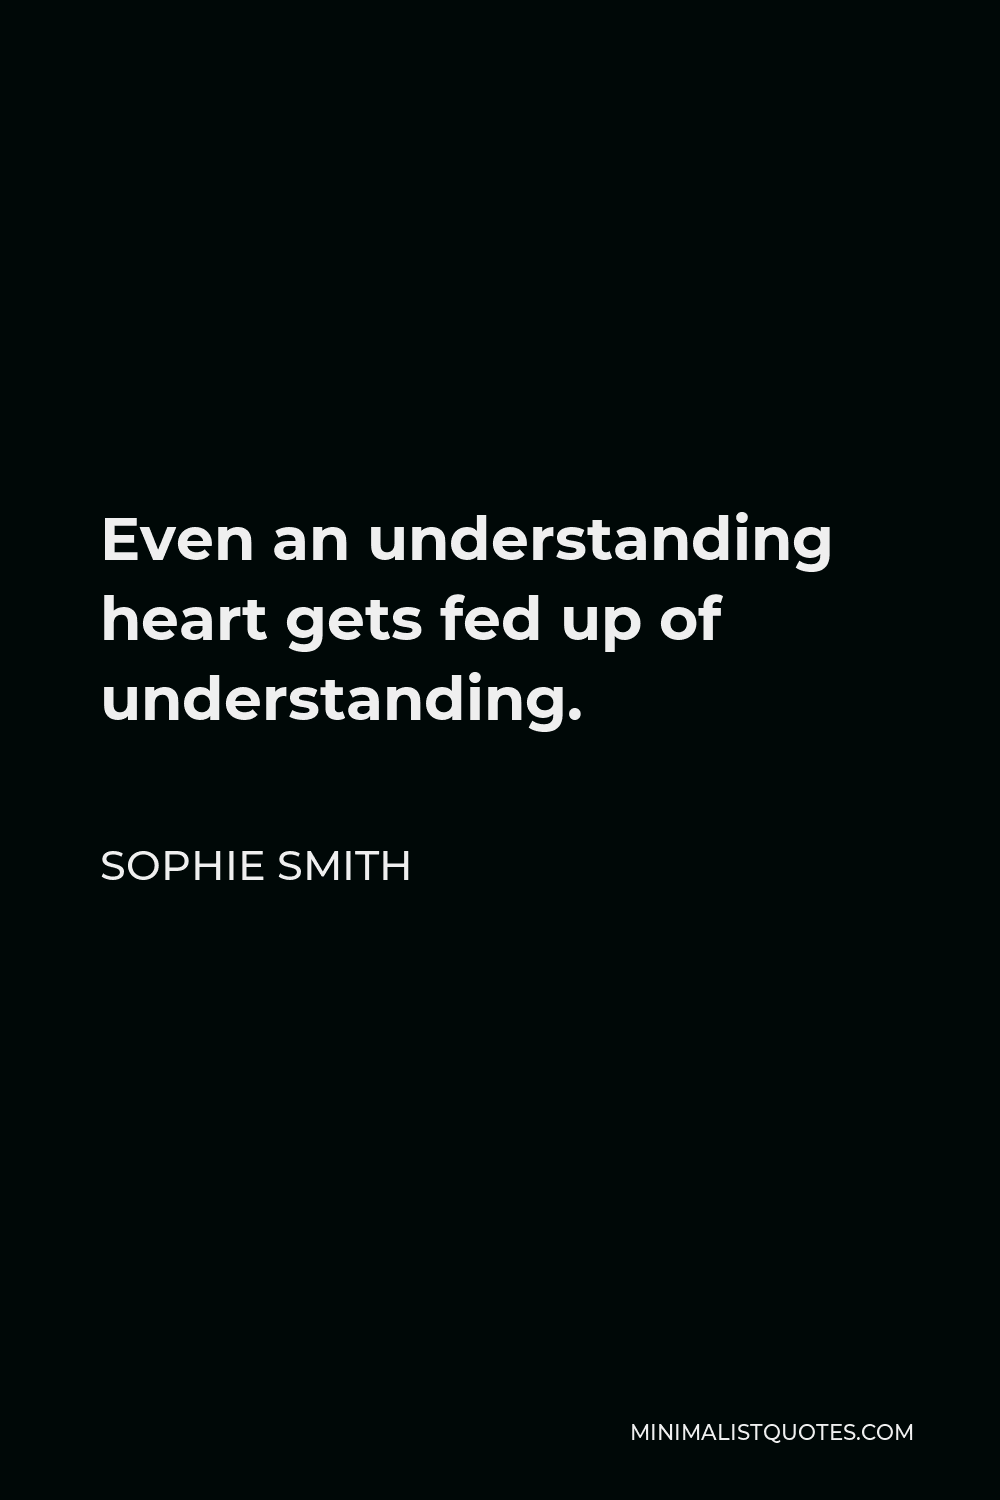 Sophie Smith Quote - Even an understanding heart gets fed up of understanding.